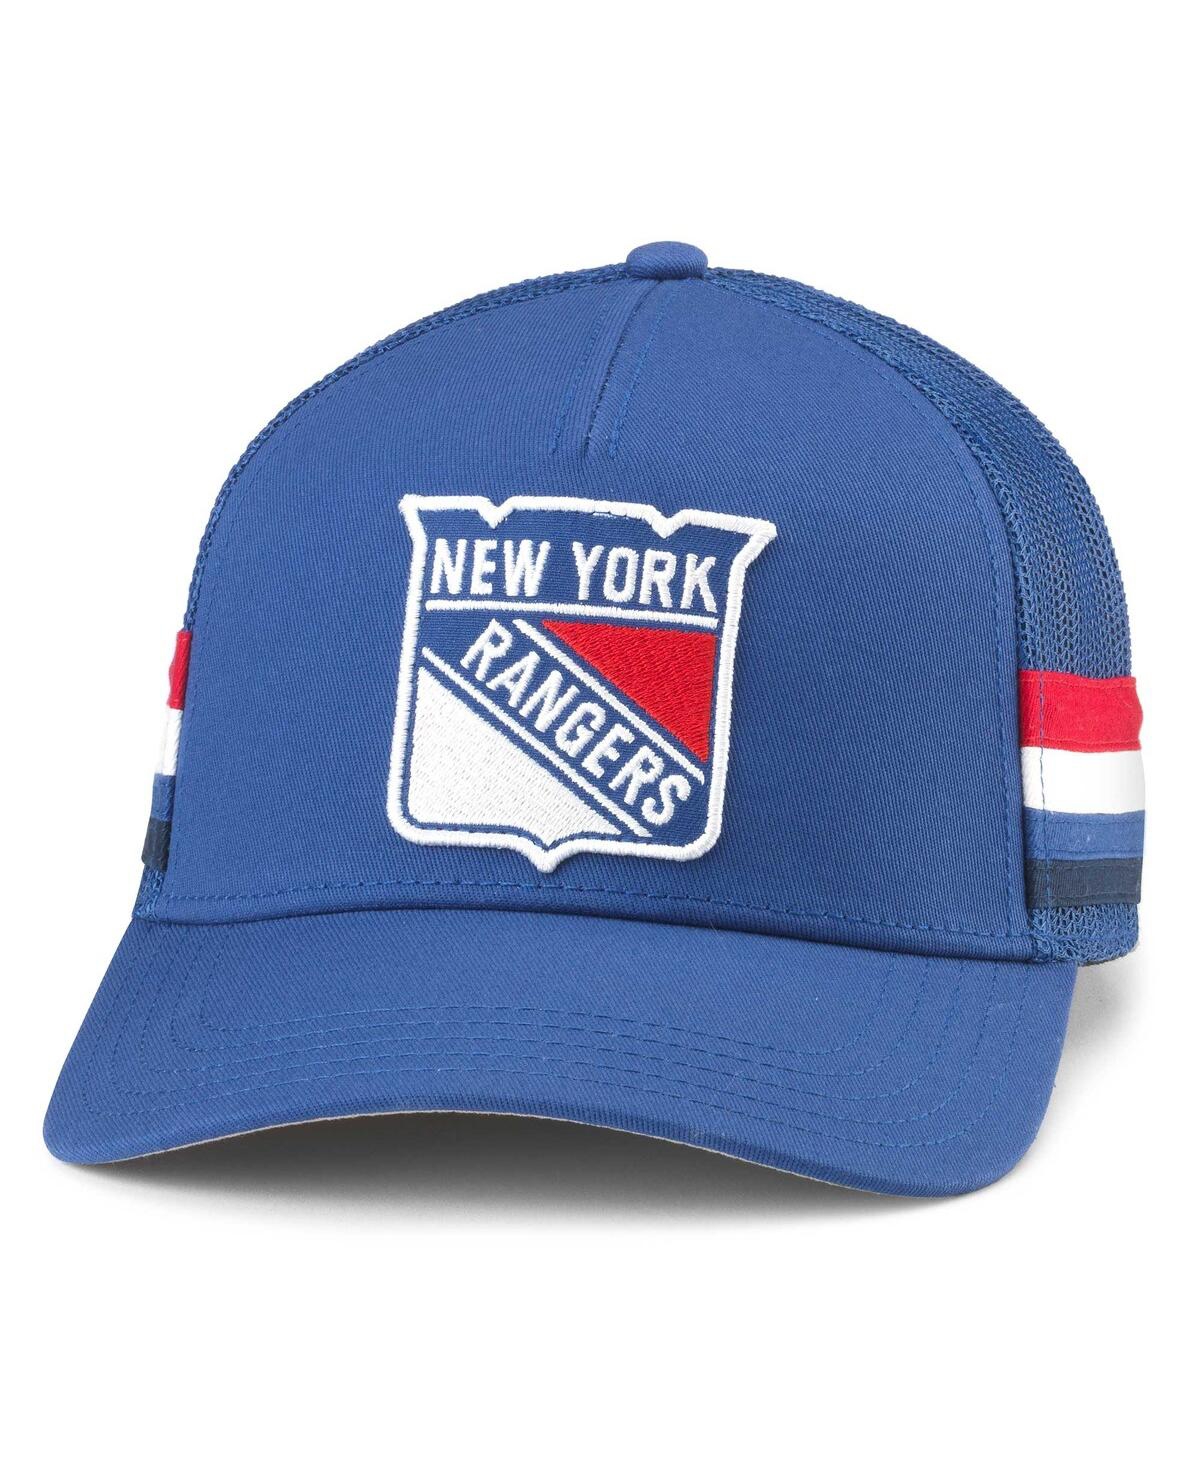 Shop American Needle Men's  Blue New York Rangers Hotfoot Stripes Trucker Adjustable Hat